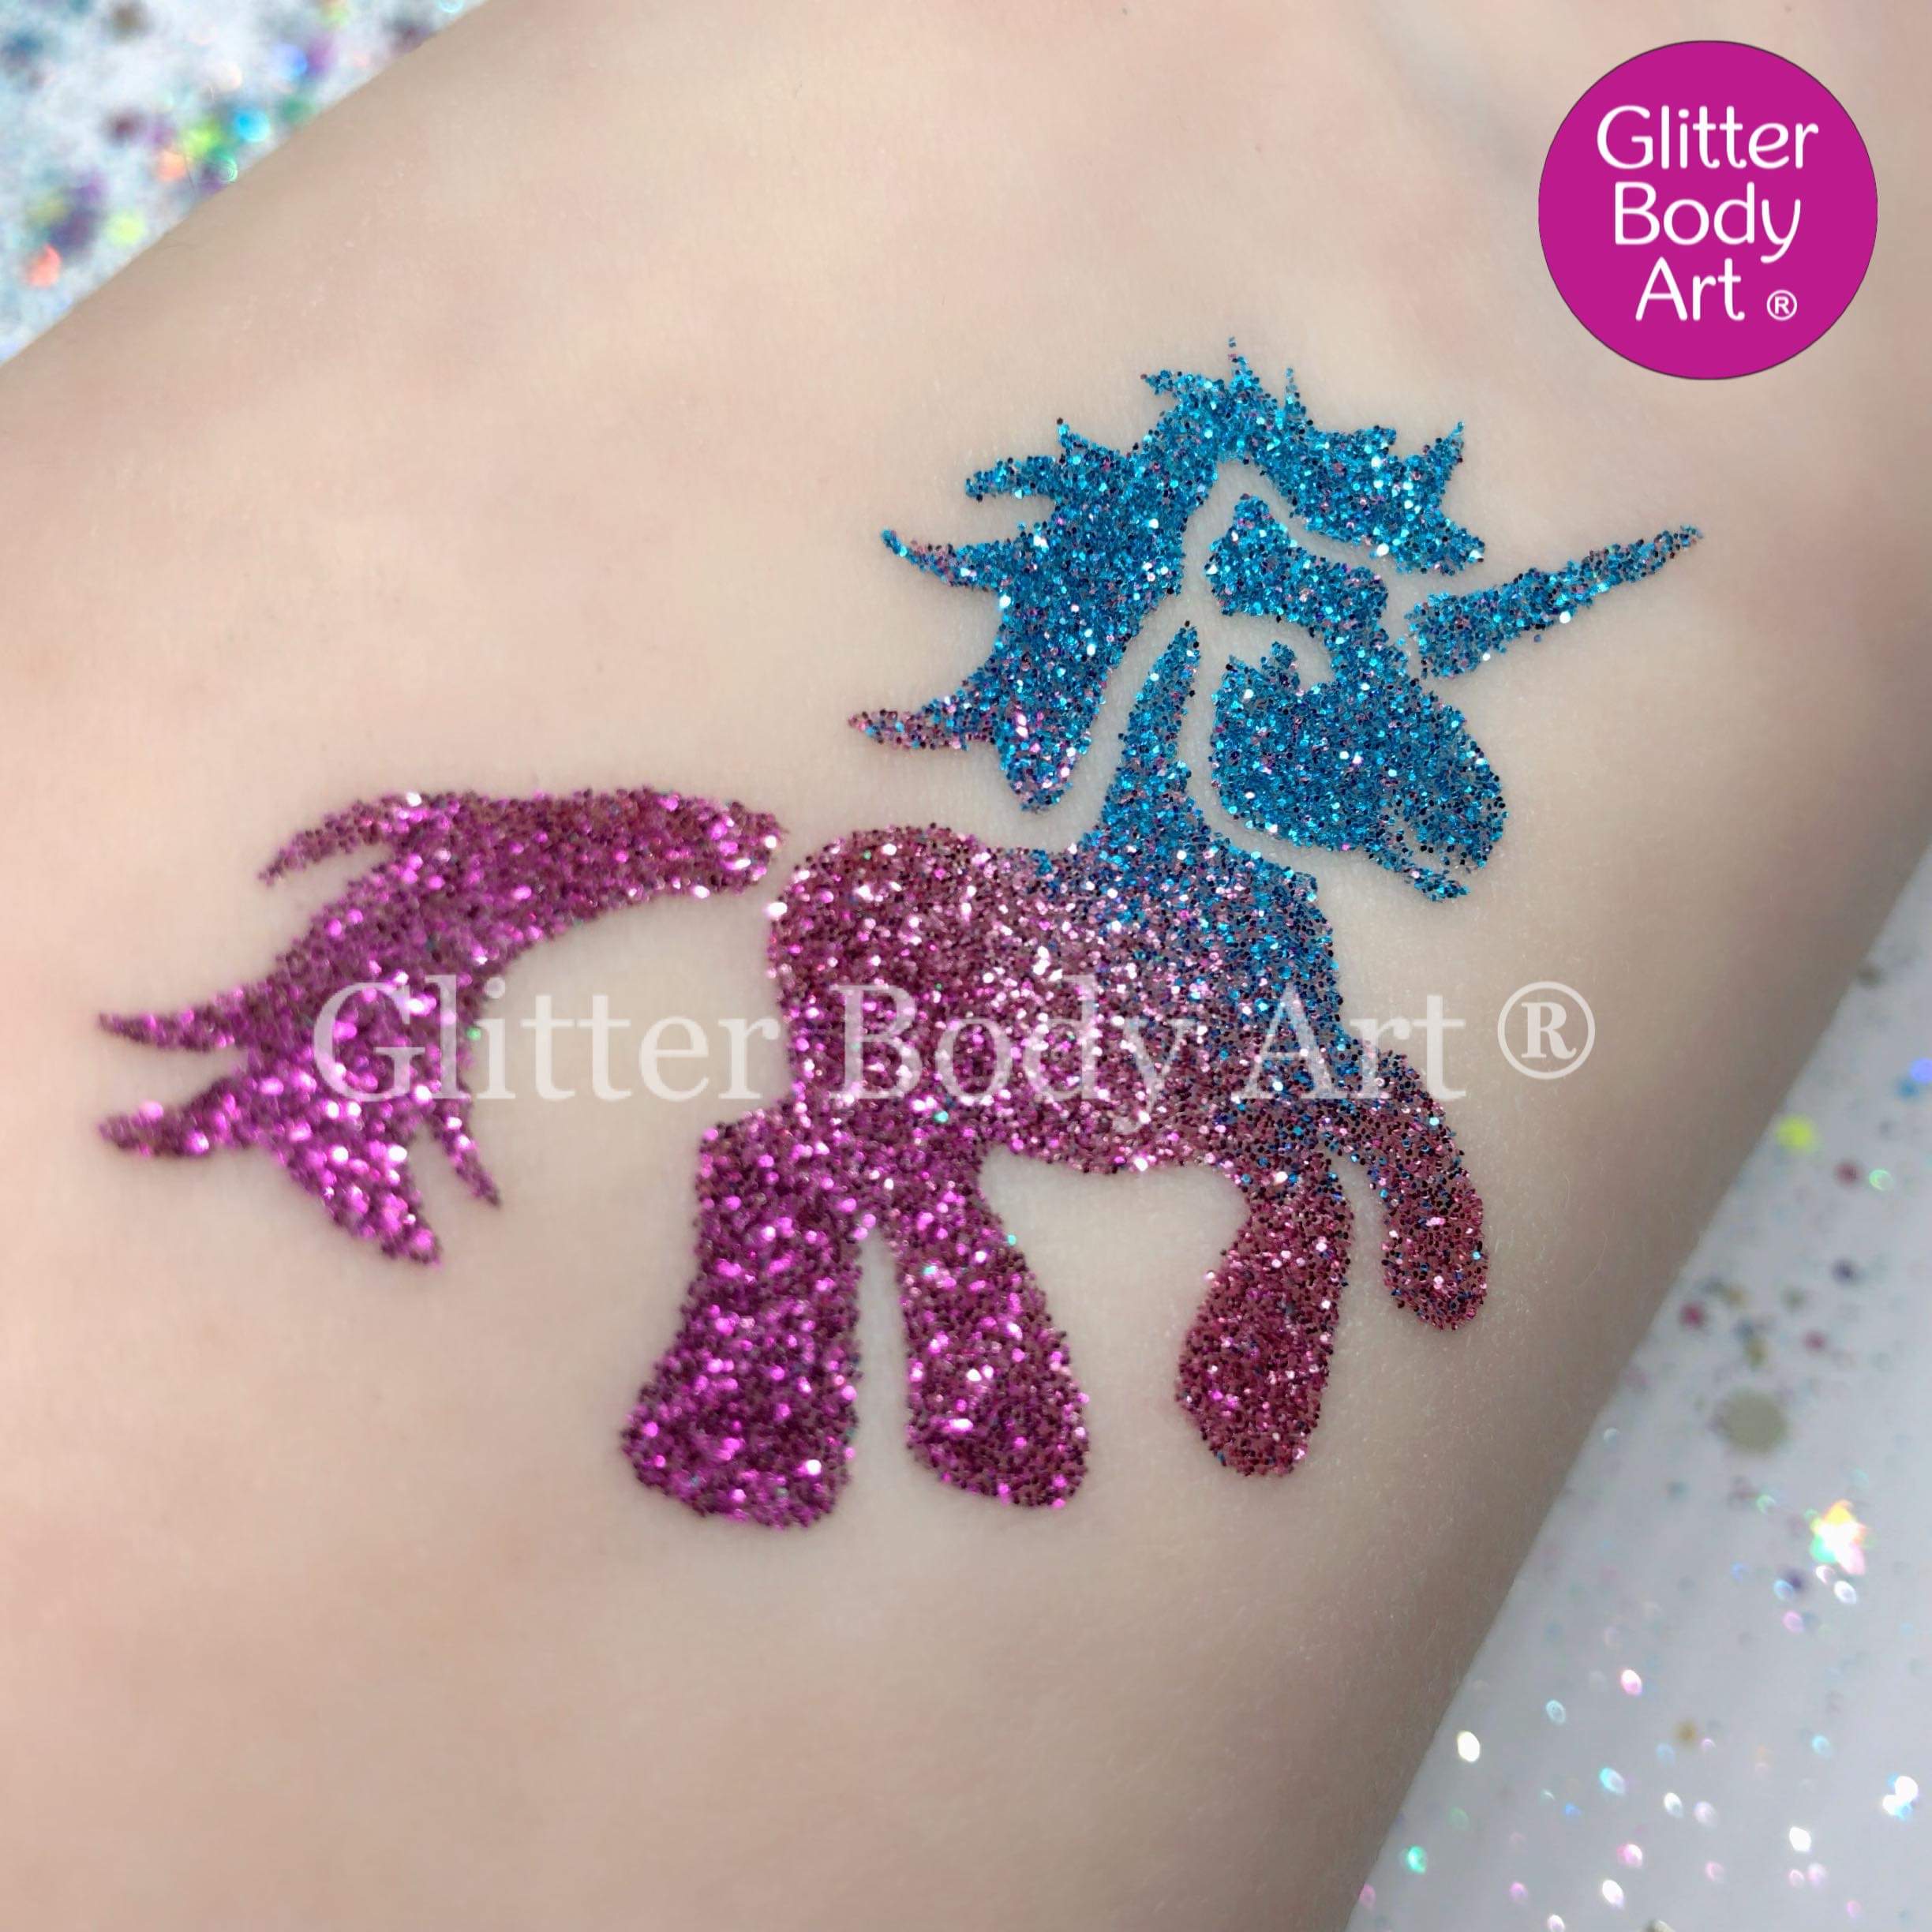 My little pony unicorn glitter tattoo for girls birthday party ideas